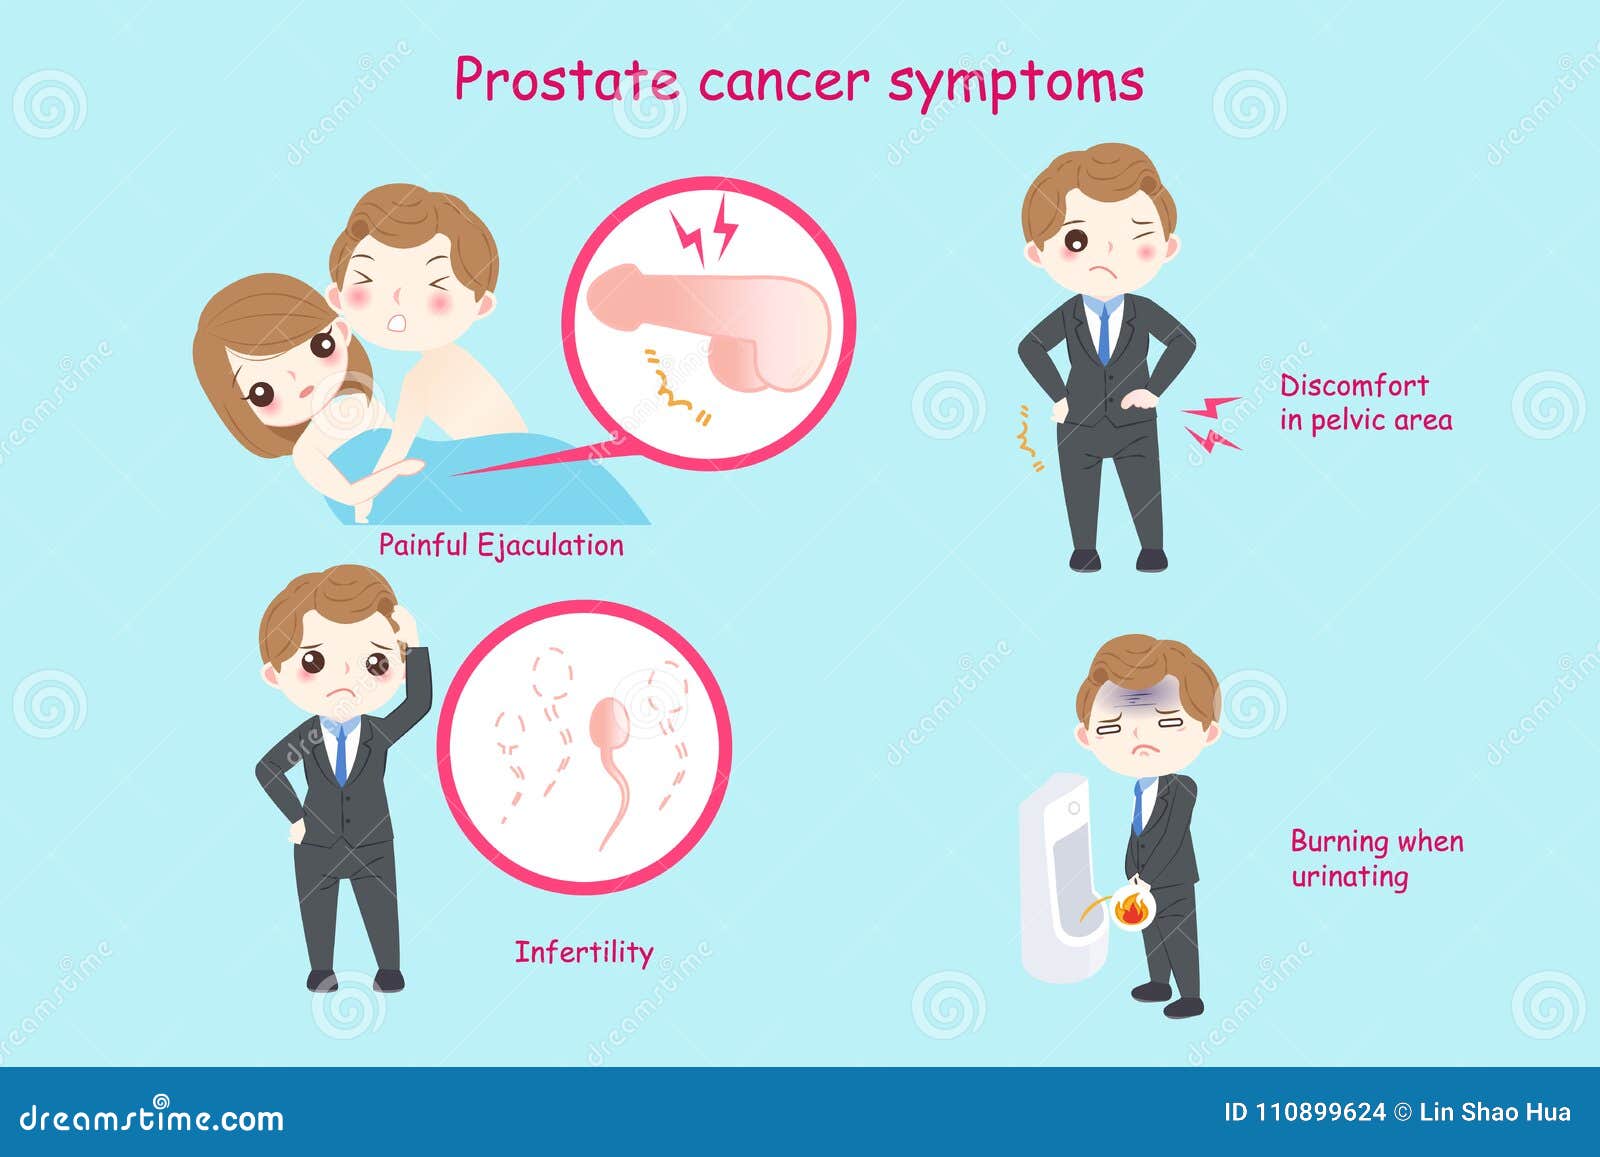 sintoma de cancer prostata)